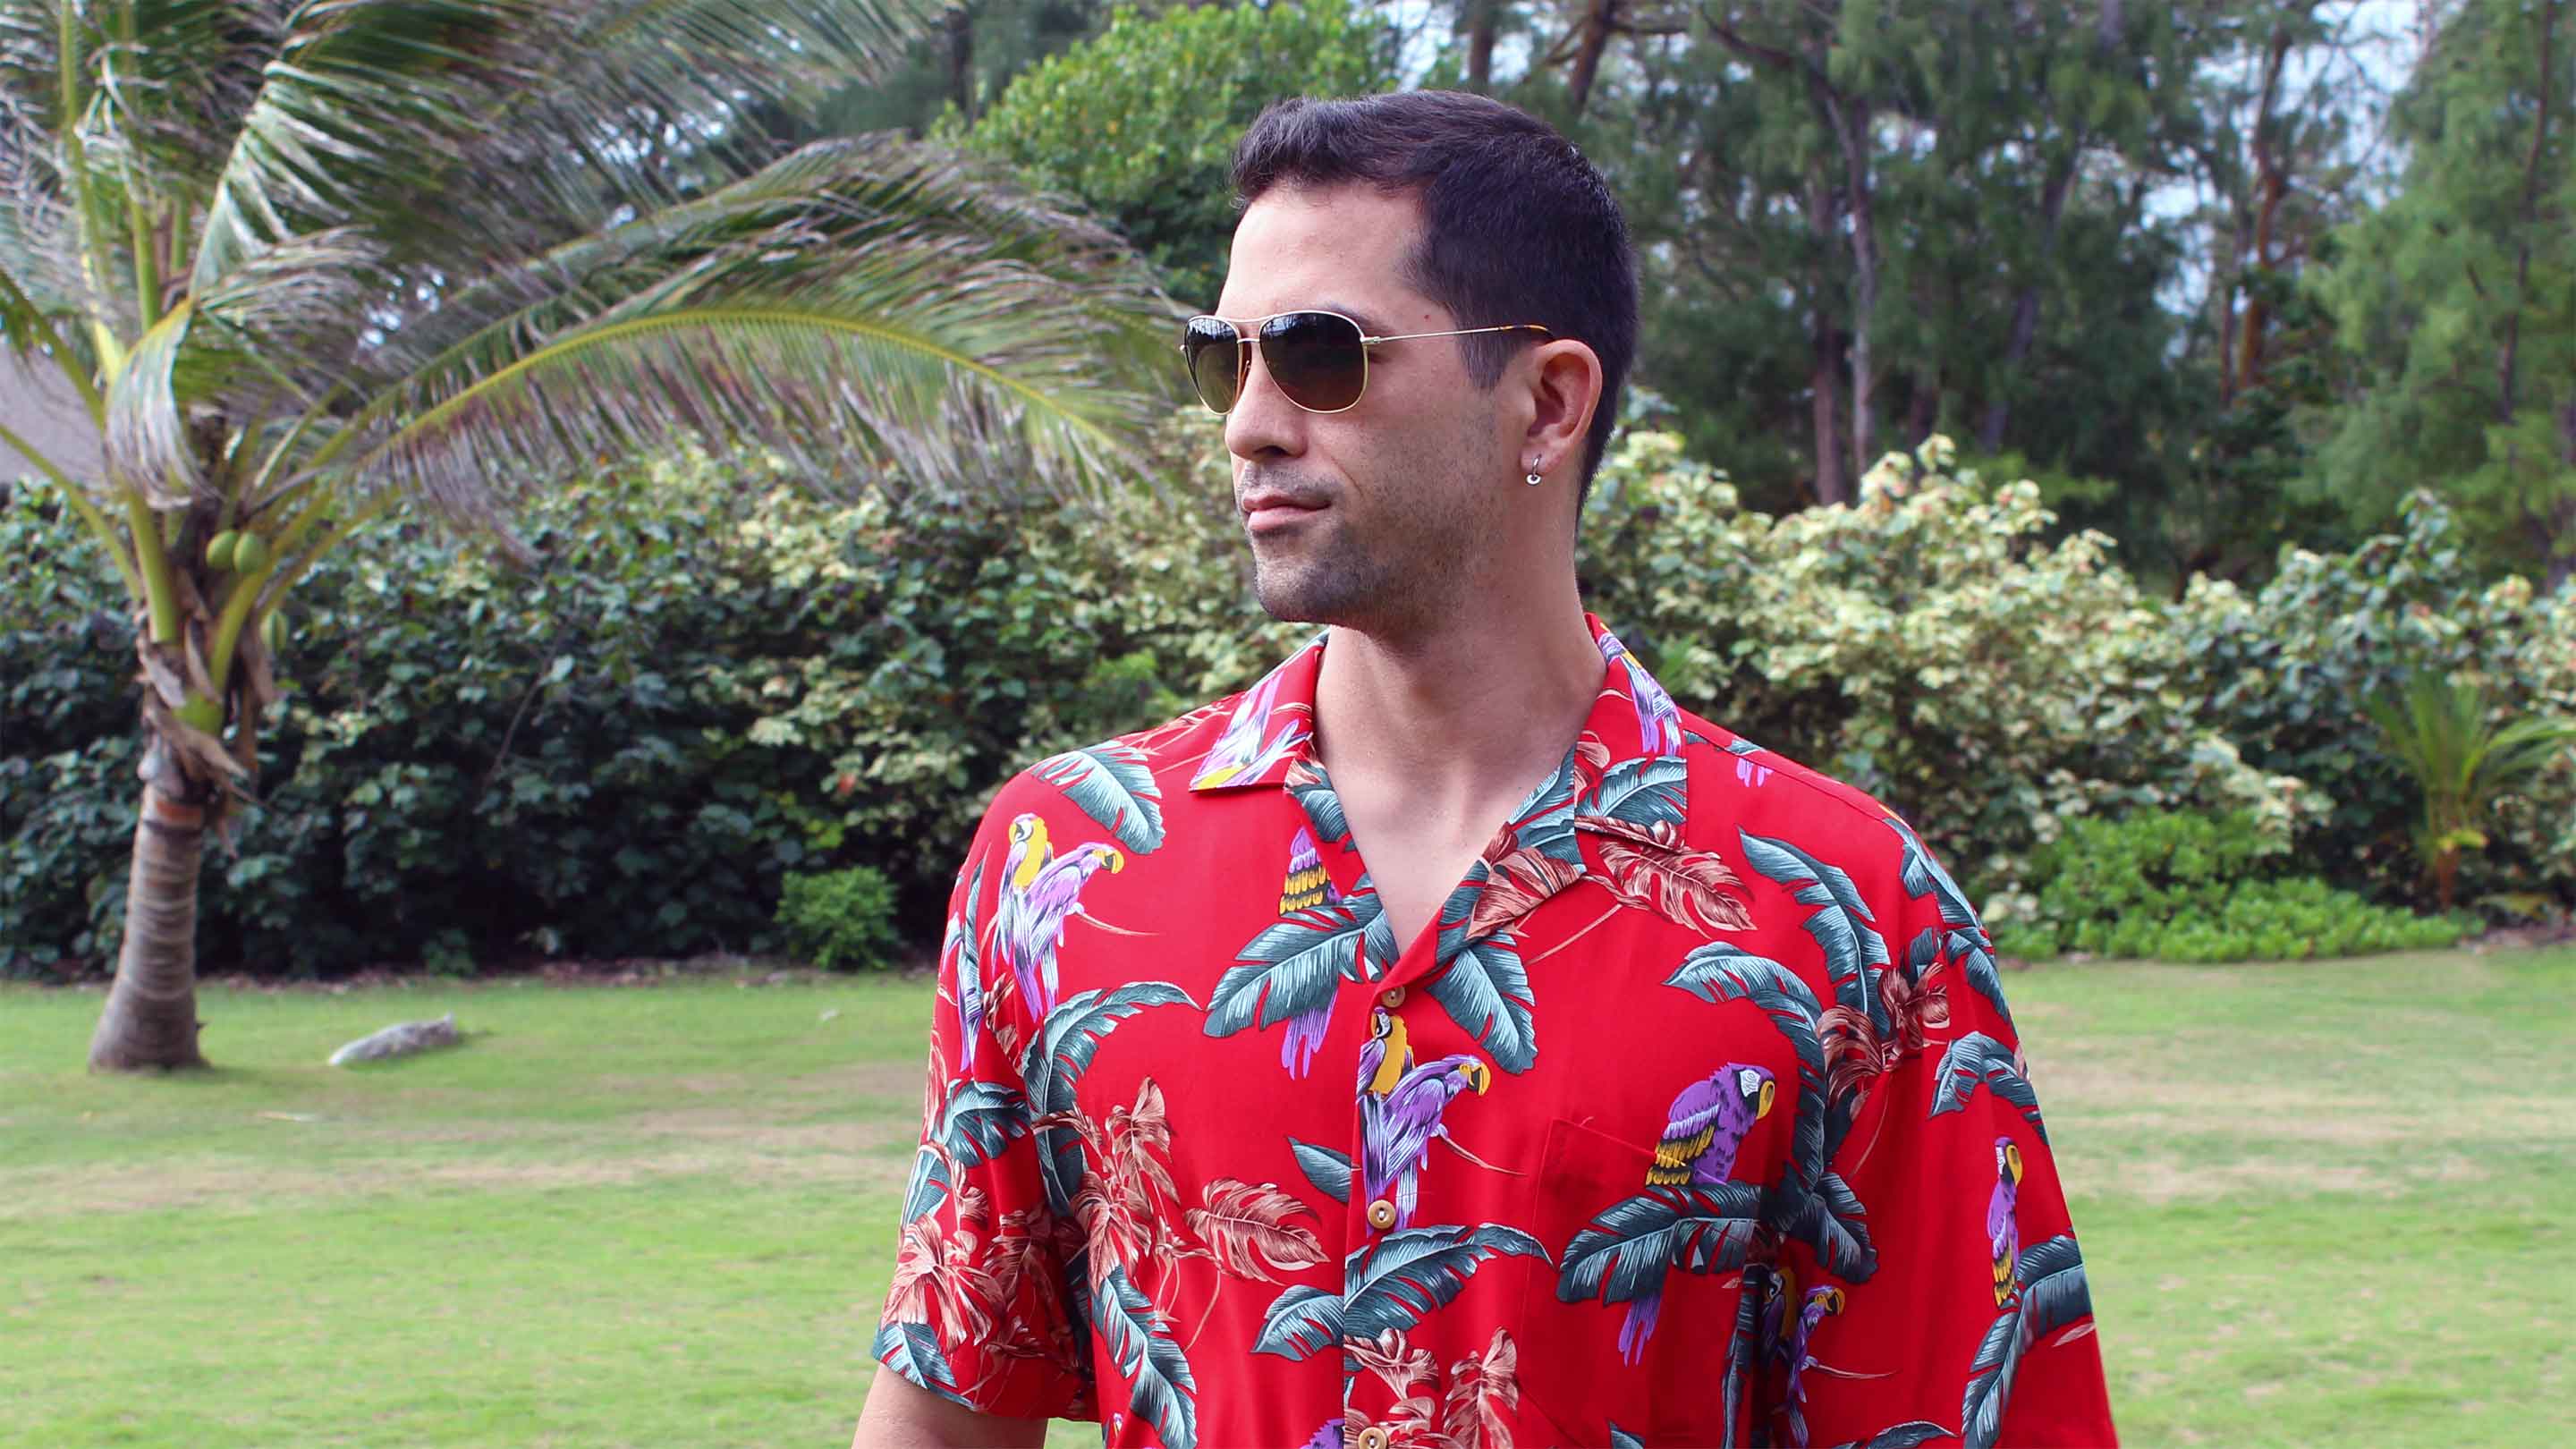 Our Top 40 Most Popular Men's Hawaiian Shirts –